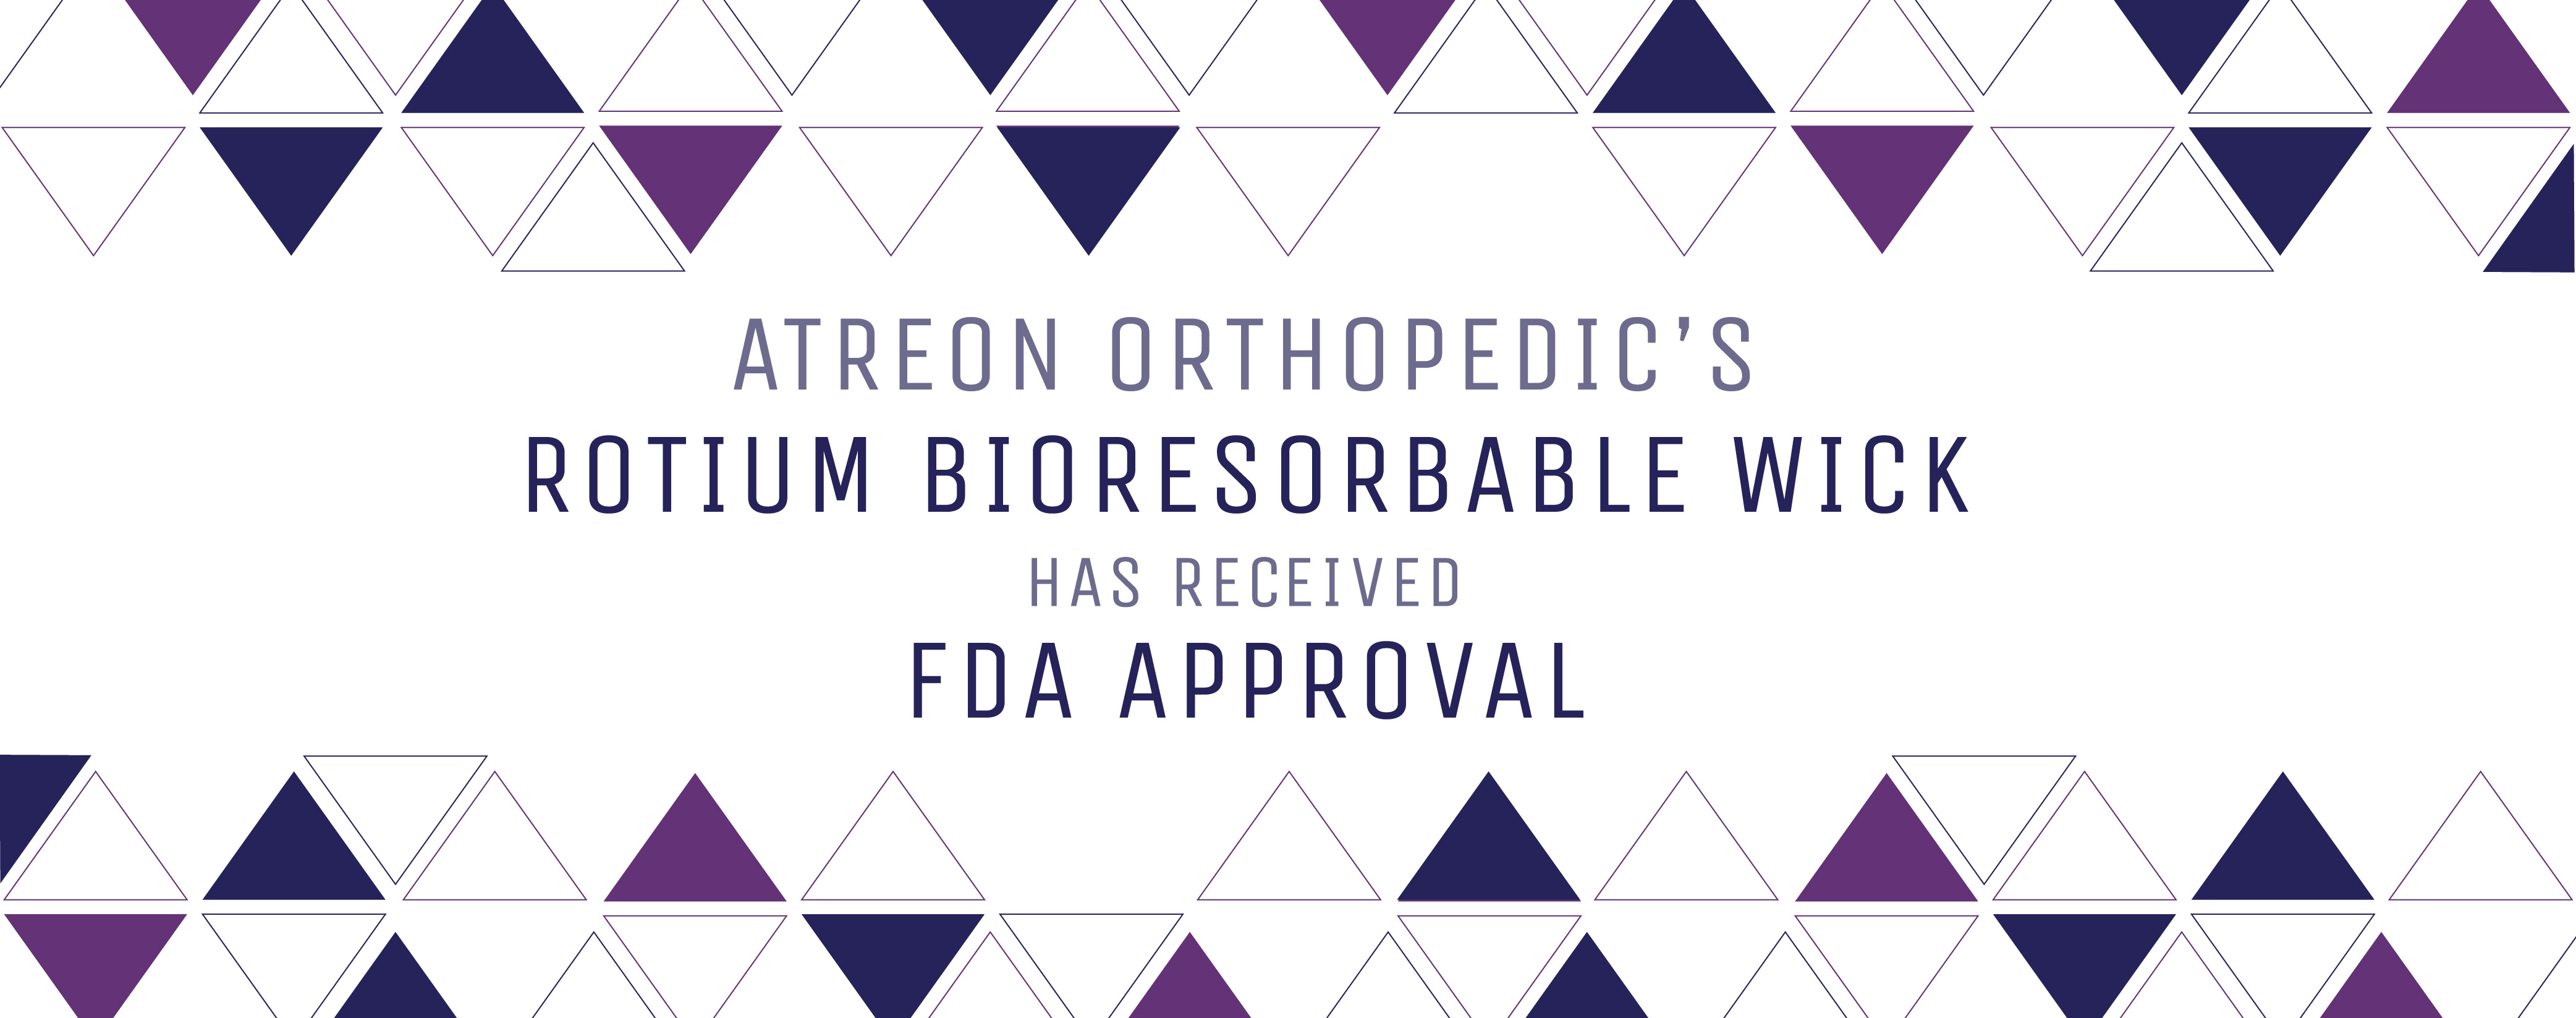 Atreon-Orthopedics-Rotium-Bio-Resorbable-Wick-FDA-Approval